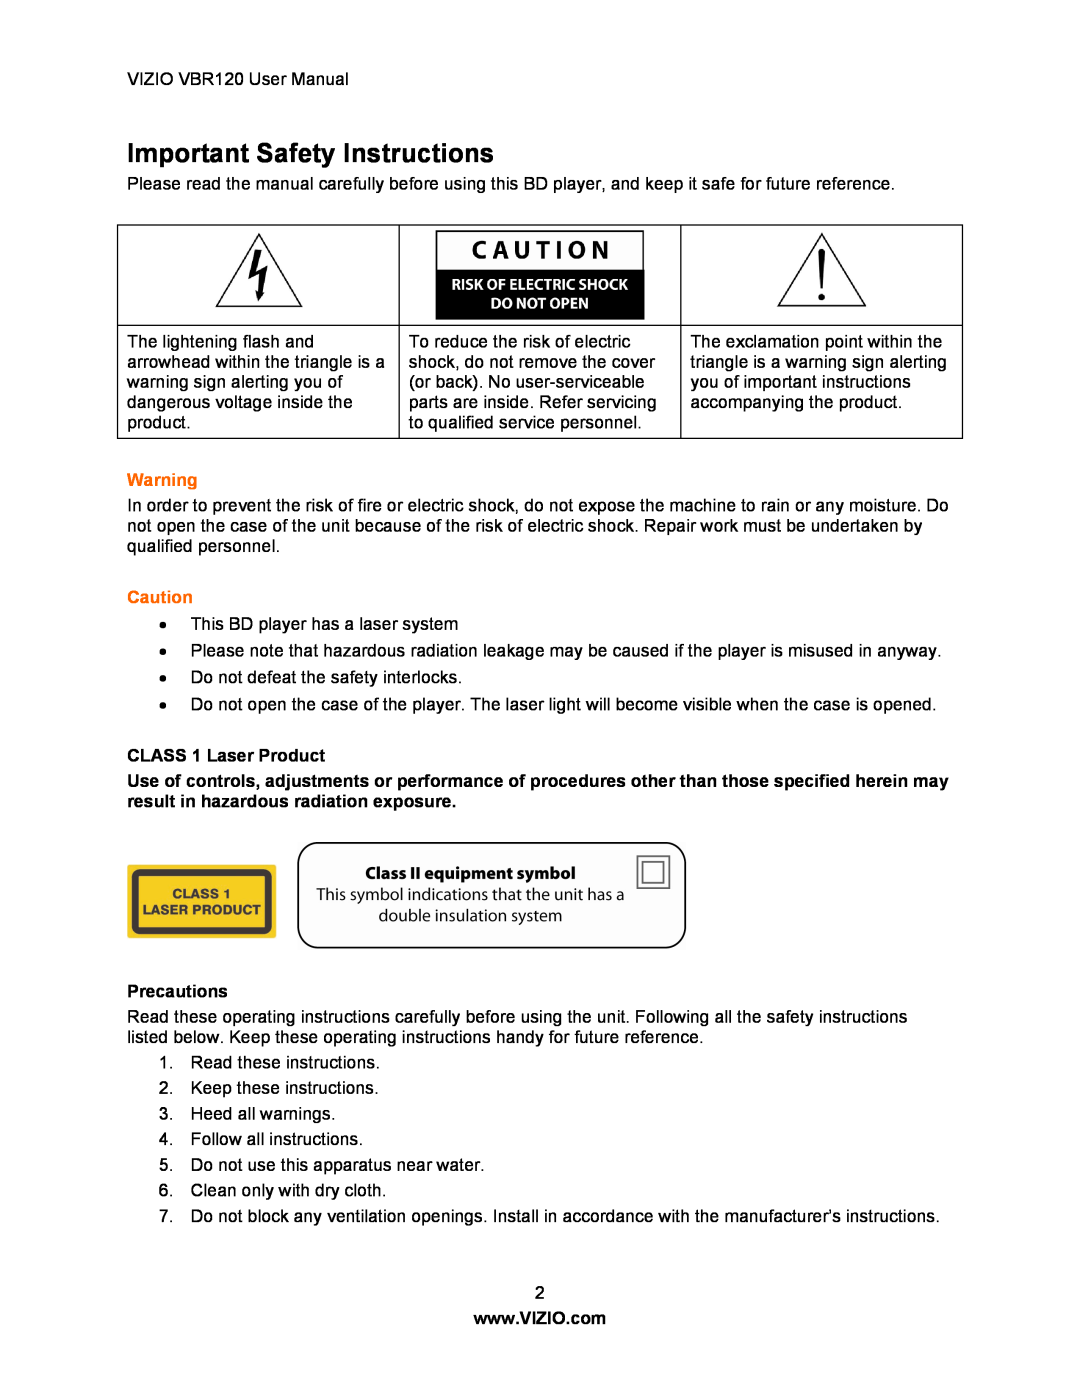 Vizio VBR 120 user manual Important Safety Instructions, CLASS 1 Laser Product, Precautions 